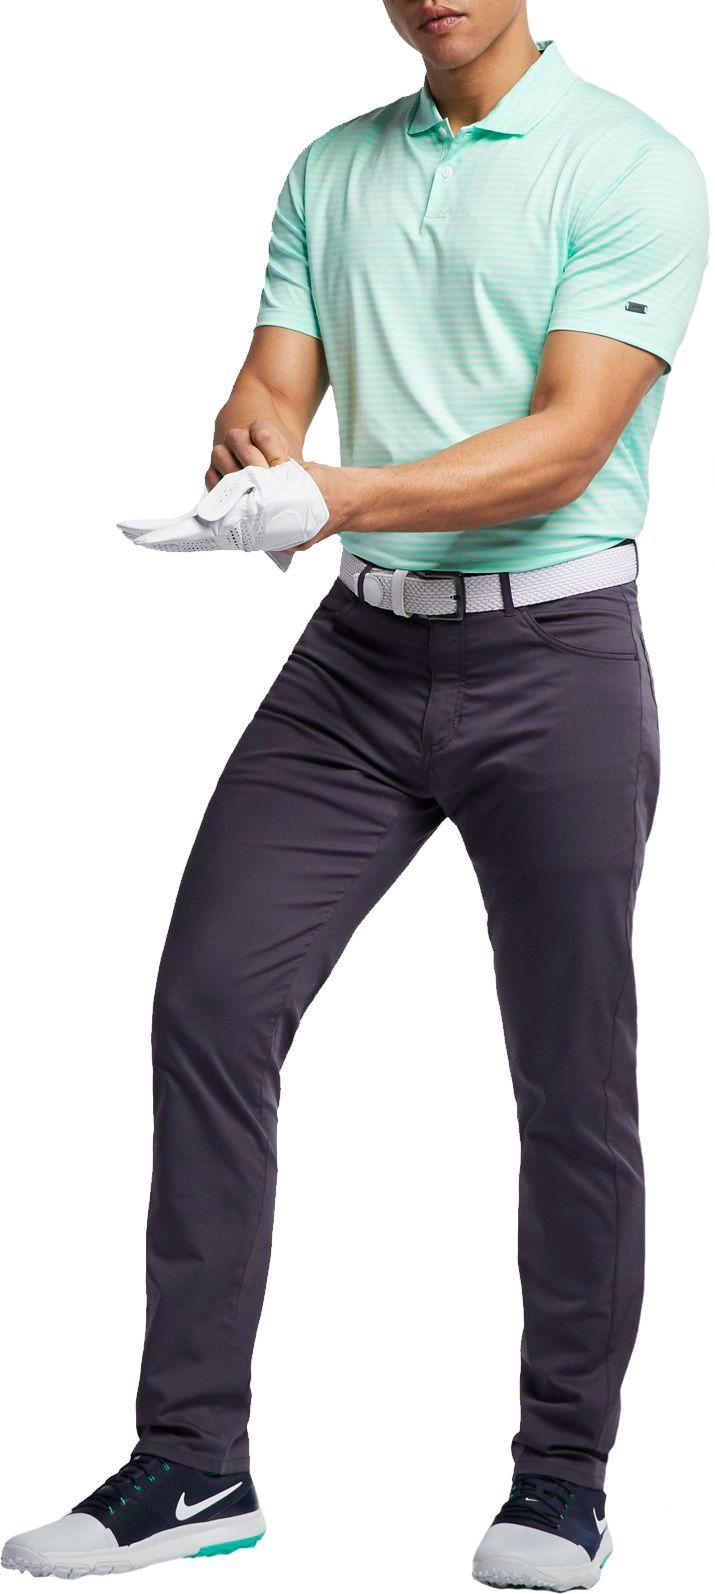 nike slim 5 pocket golf pants